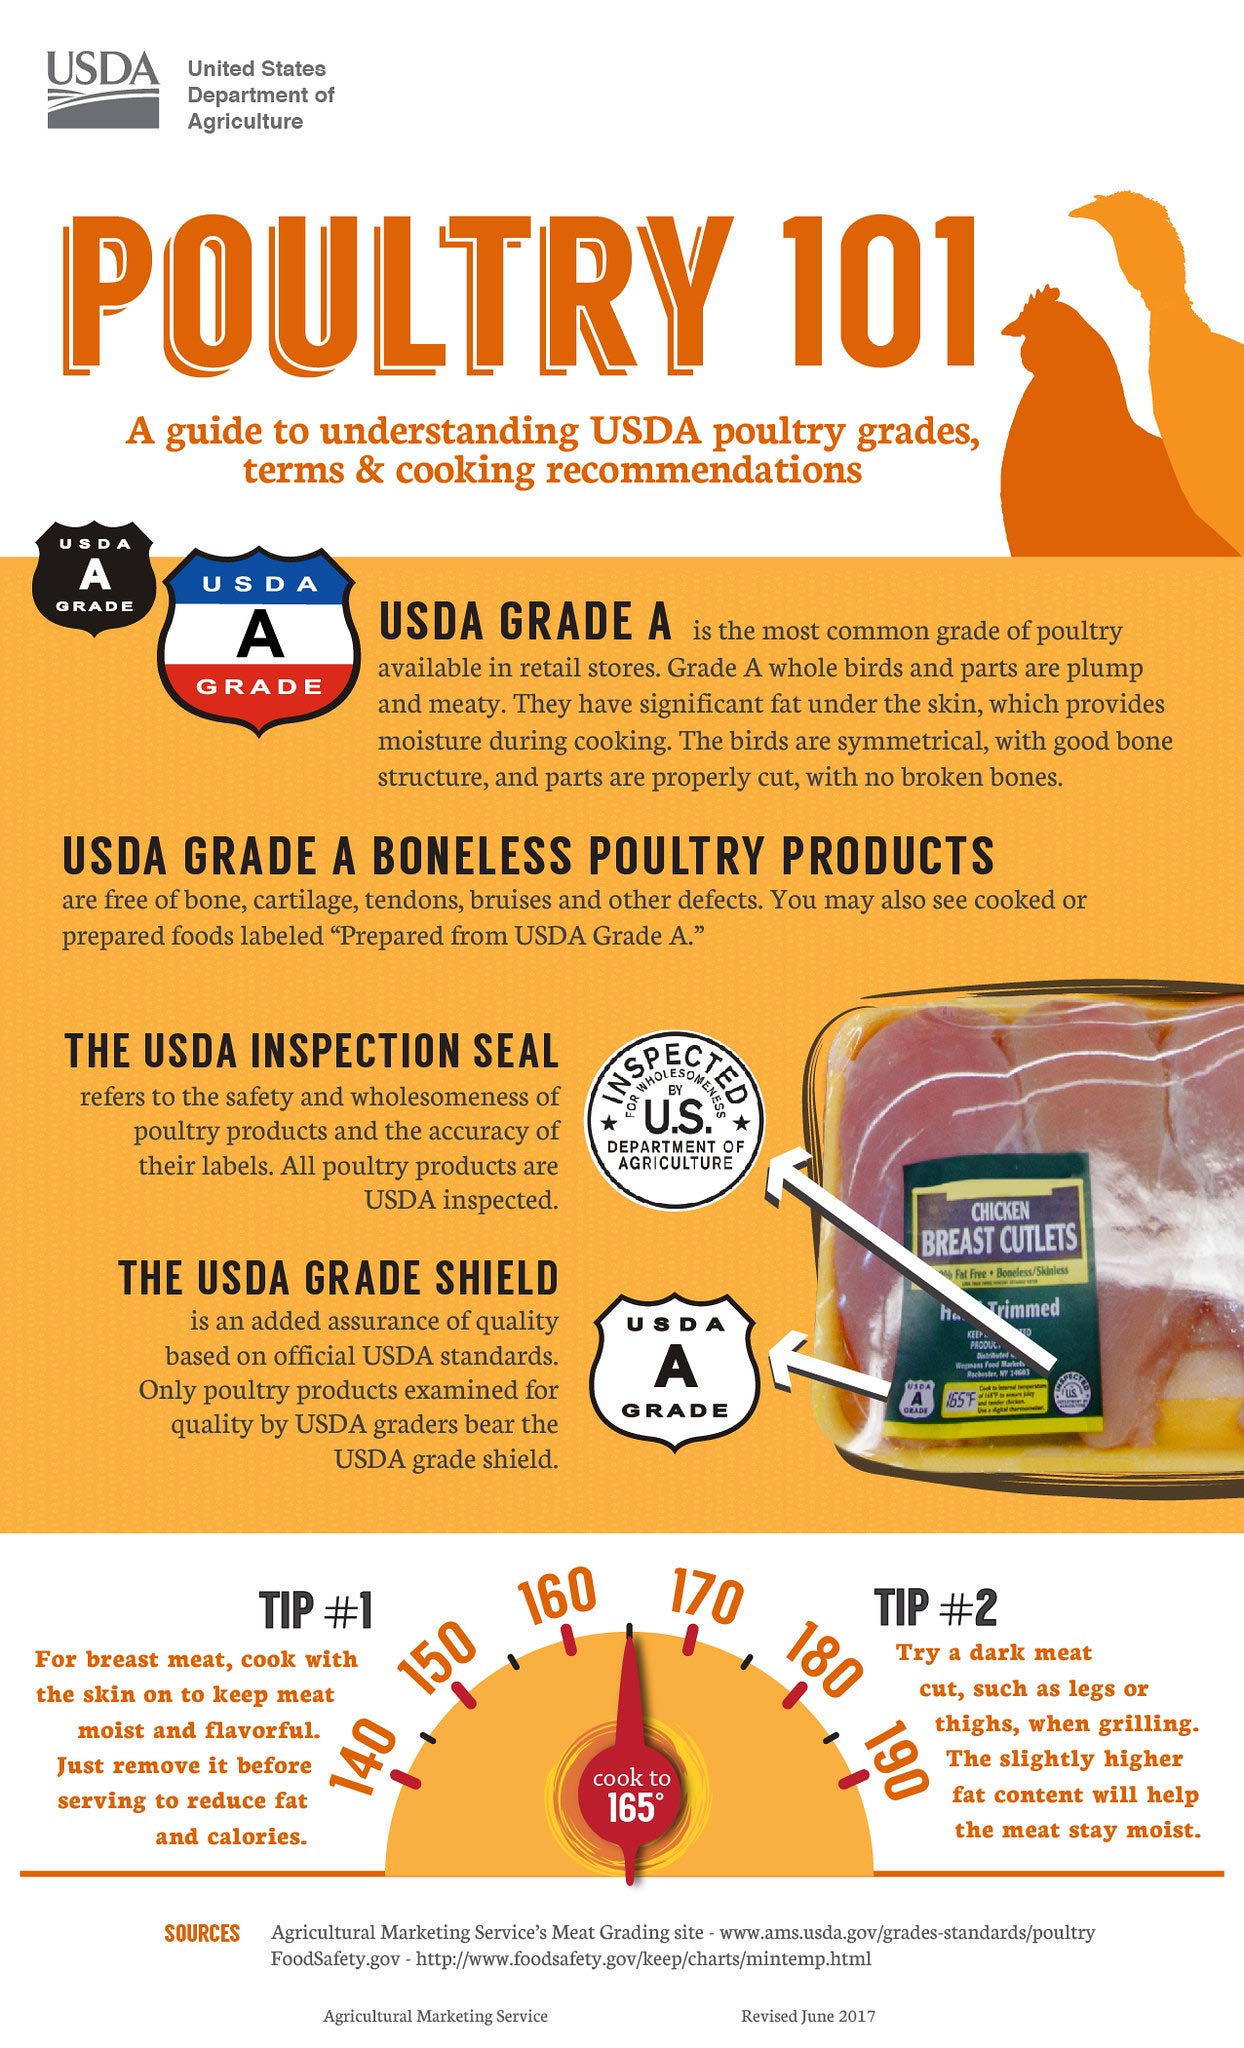 http://foodsafetytrainingcertification.com/wp-content/uploads/2019/08/usda_poultry_101_food_safety.jpg?_t=1567421182